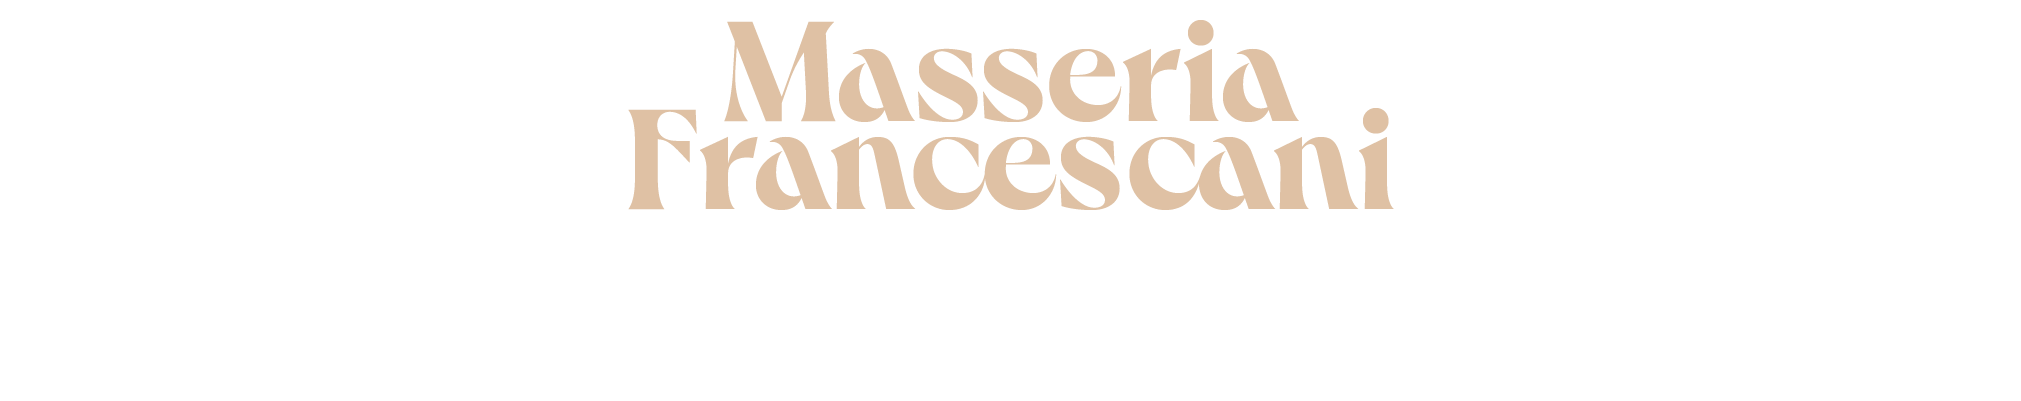 Masseria Francescani